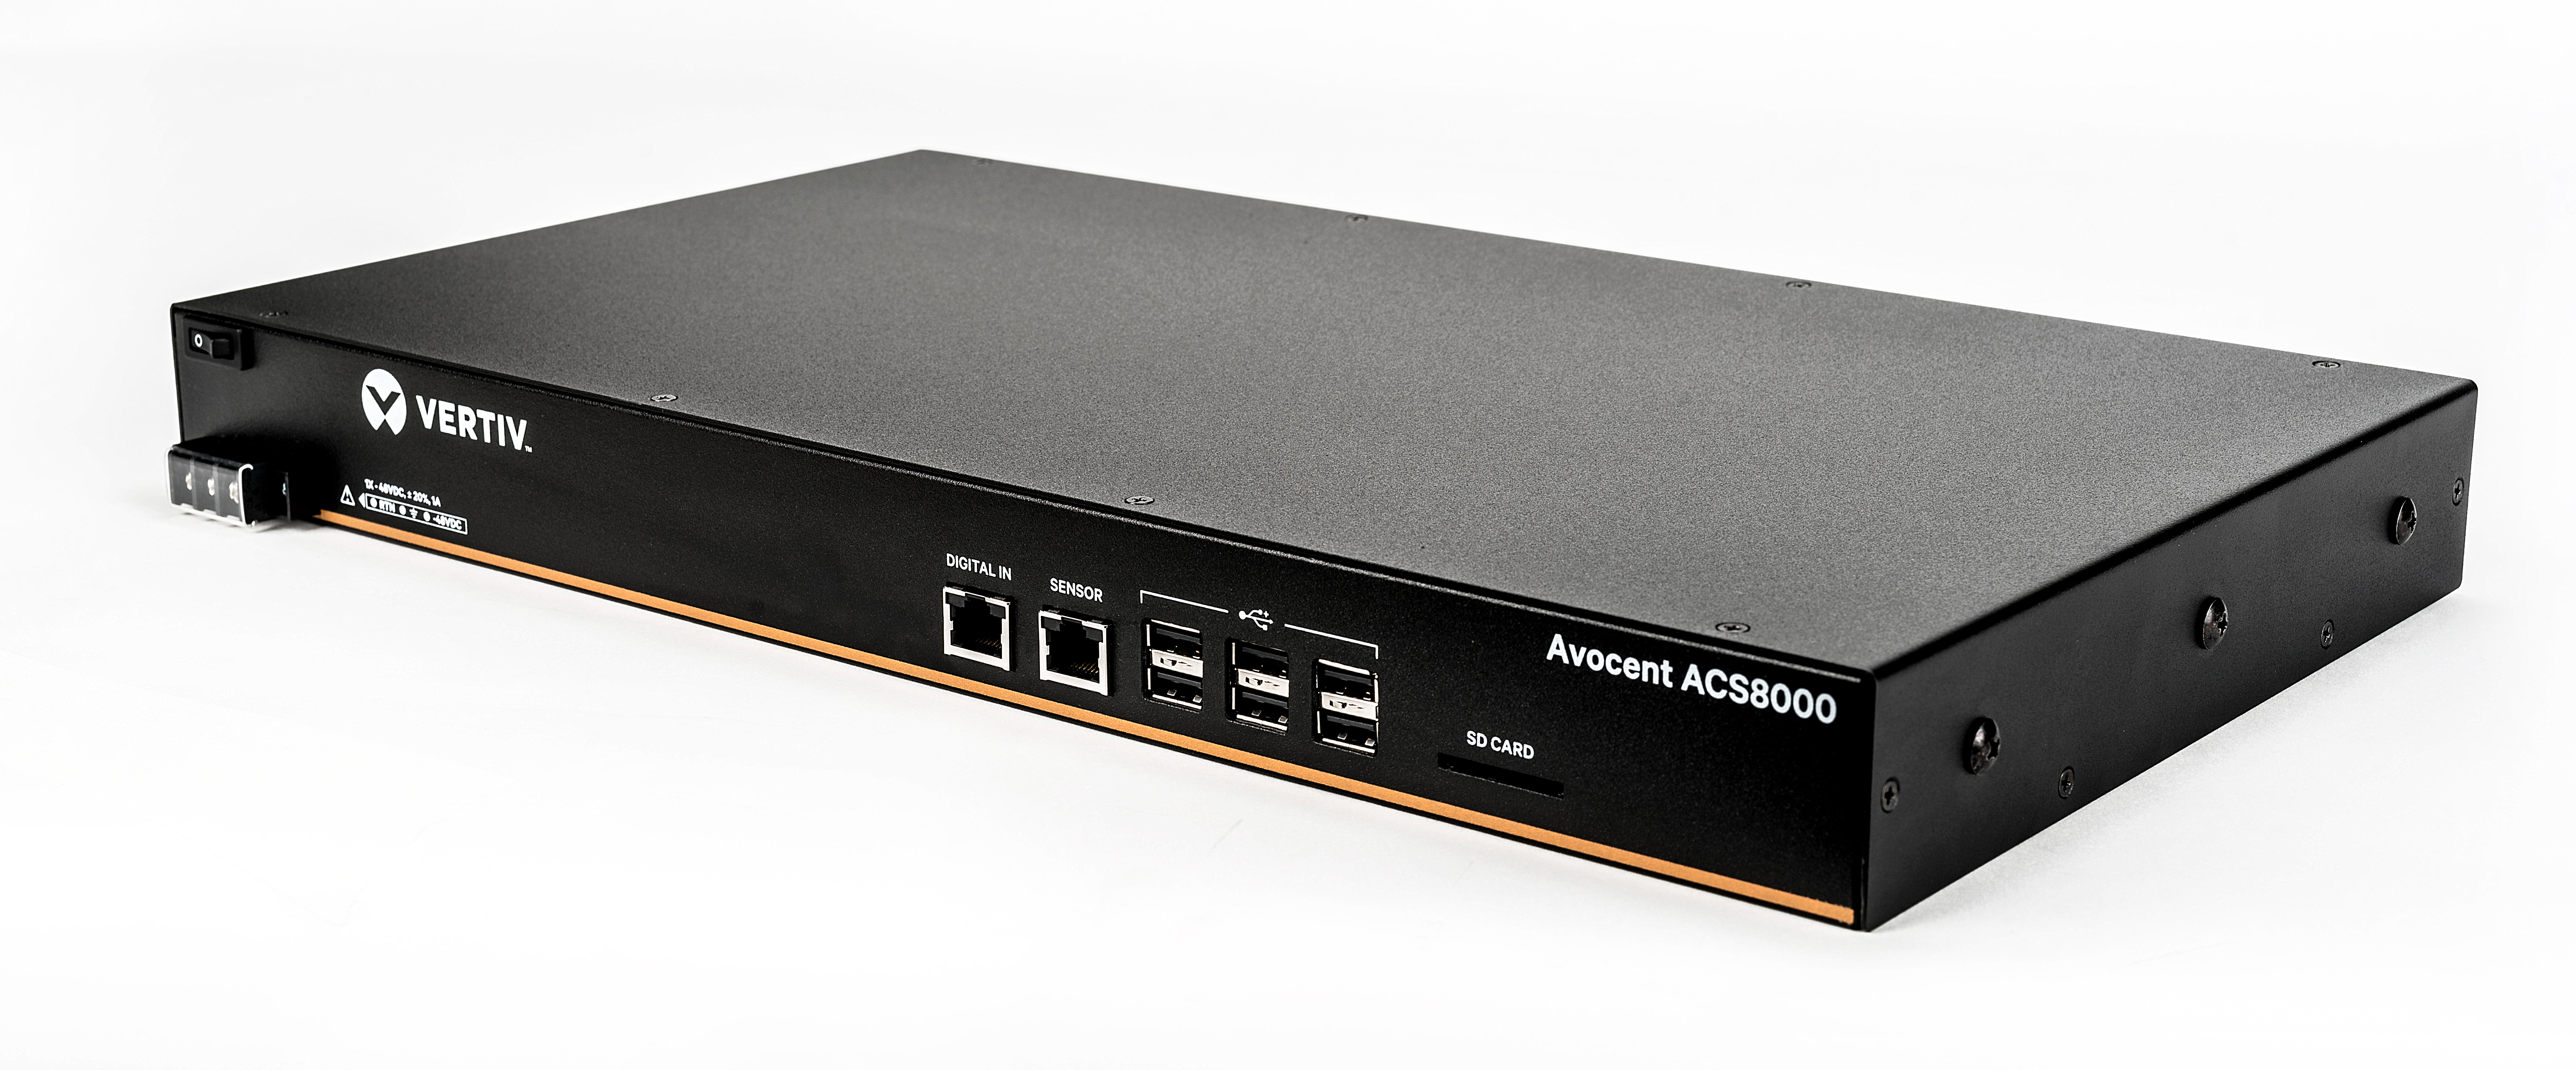 Avocent ACS Advanced Console Server ACS8008SDC-400 - Console server - 8 ports - GigE, RS-232 - DC power - 1U